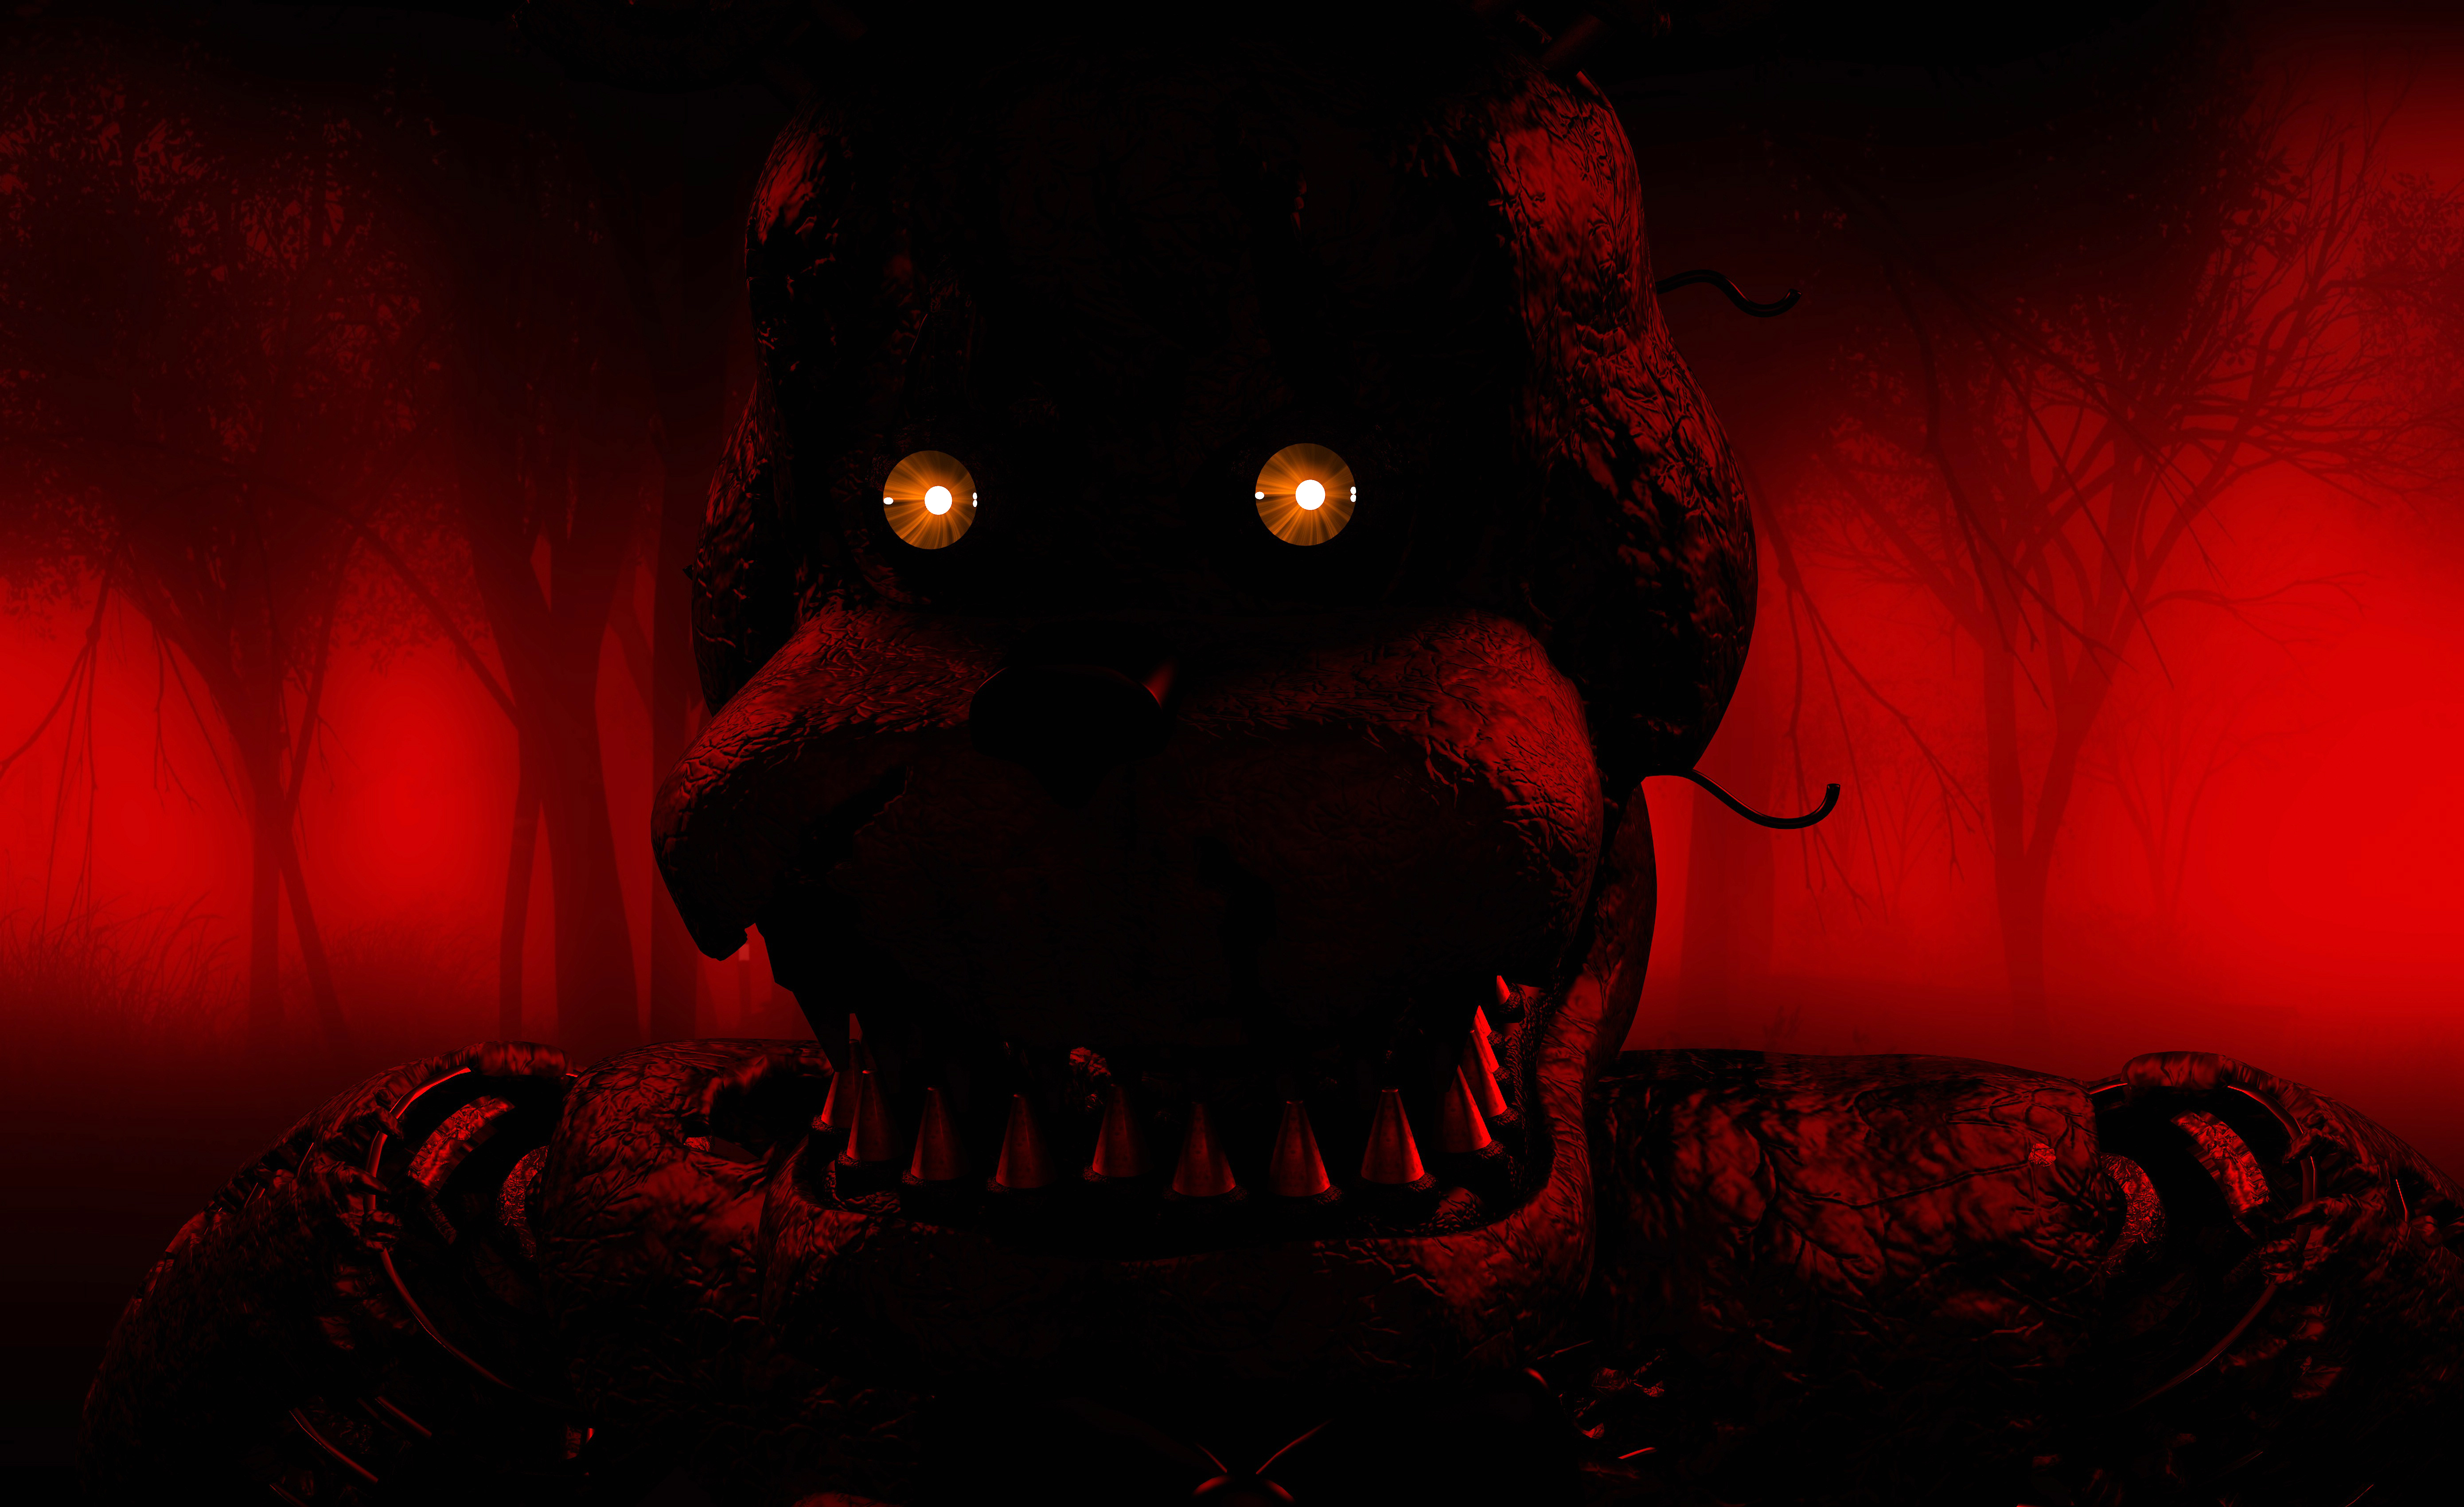 Five Nights At Freddy's 4 - Nightmares by LadyFiszi on DeviantArt